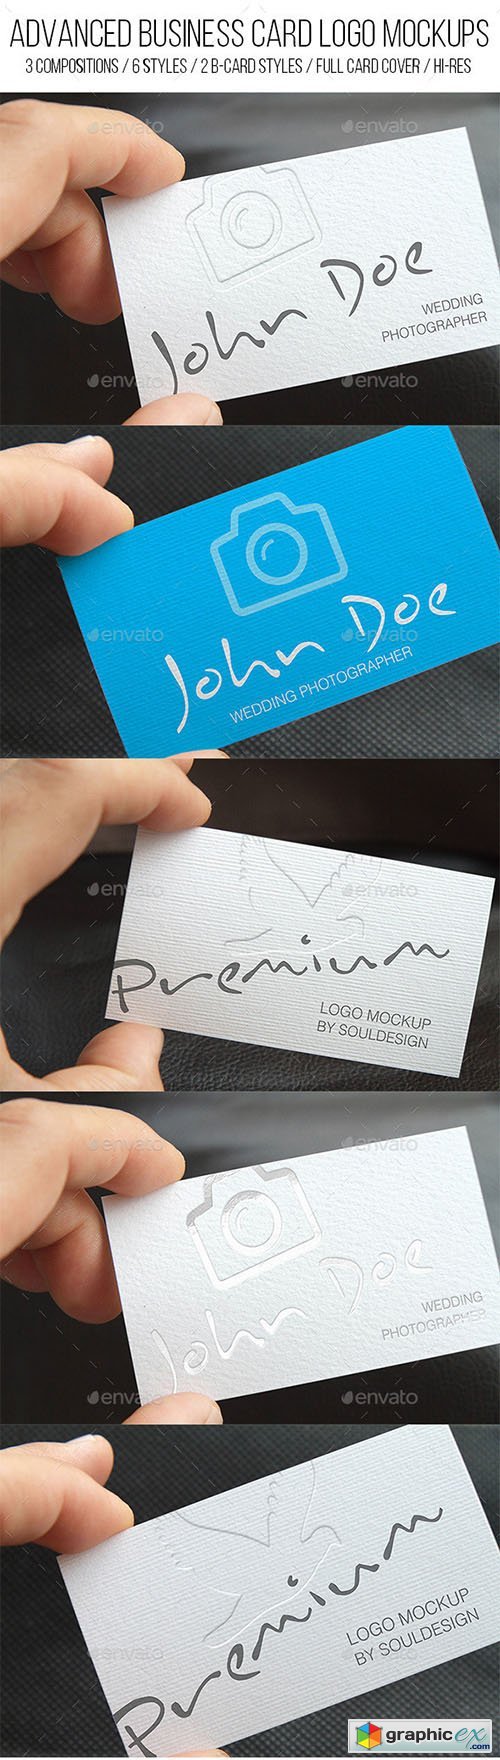 Advanced Business Card Logo Mockups